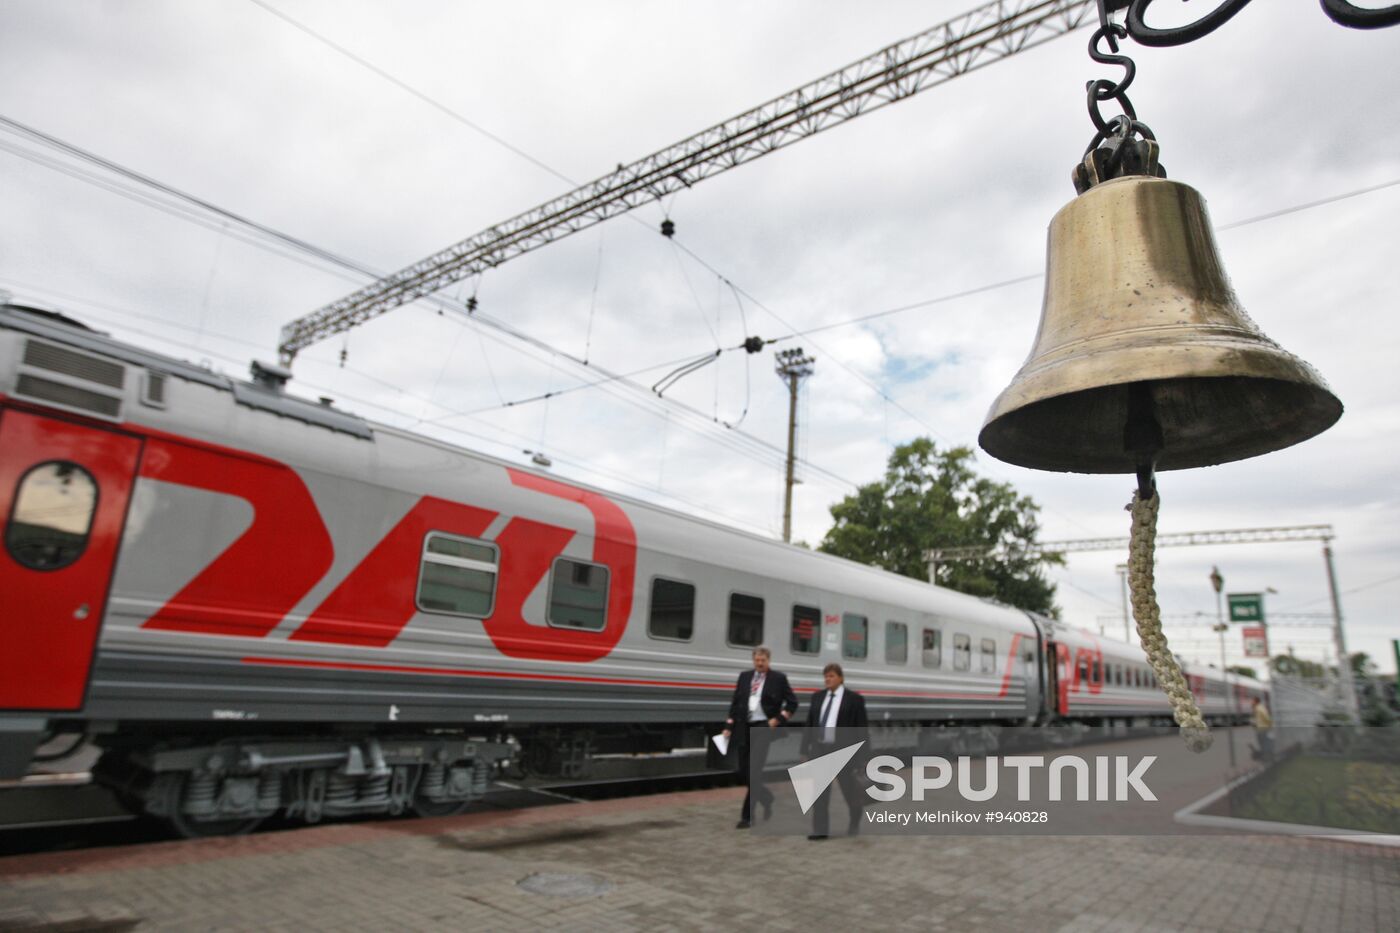 Presentaiton of Russian Railway's train museum